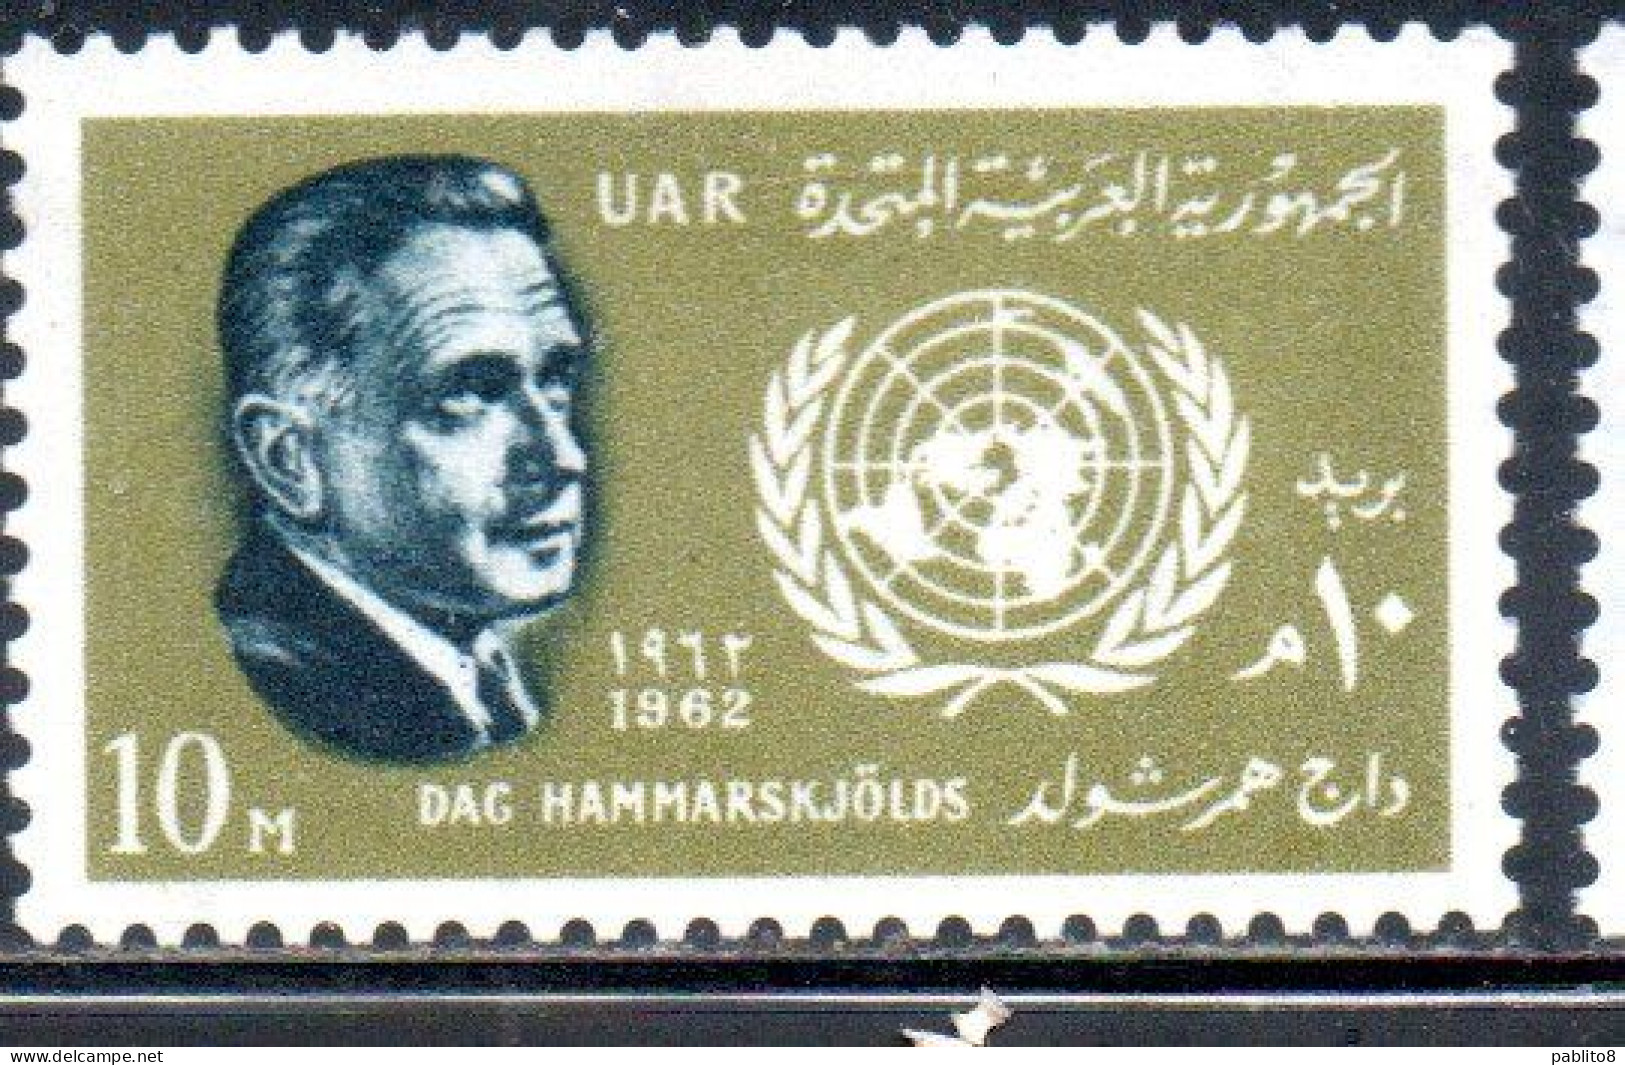 UAR EGYPT EGITTO 1962 DAG HAMMARSKJOLD SECRETARY GENERAL OF THE UN ONU 10m MH - Nuevos